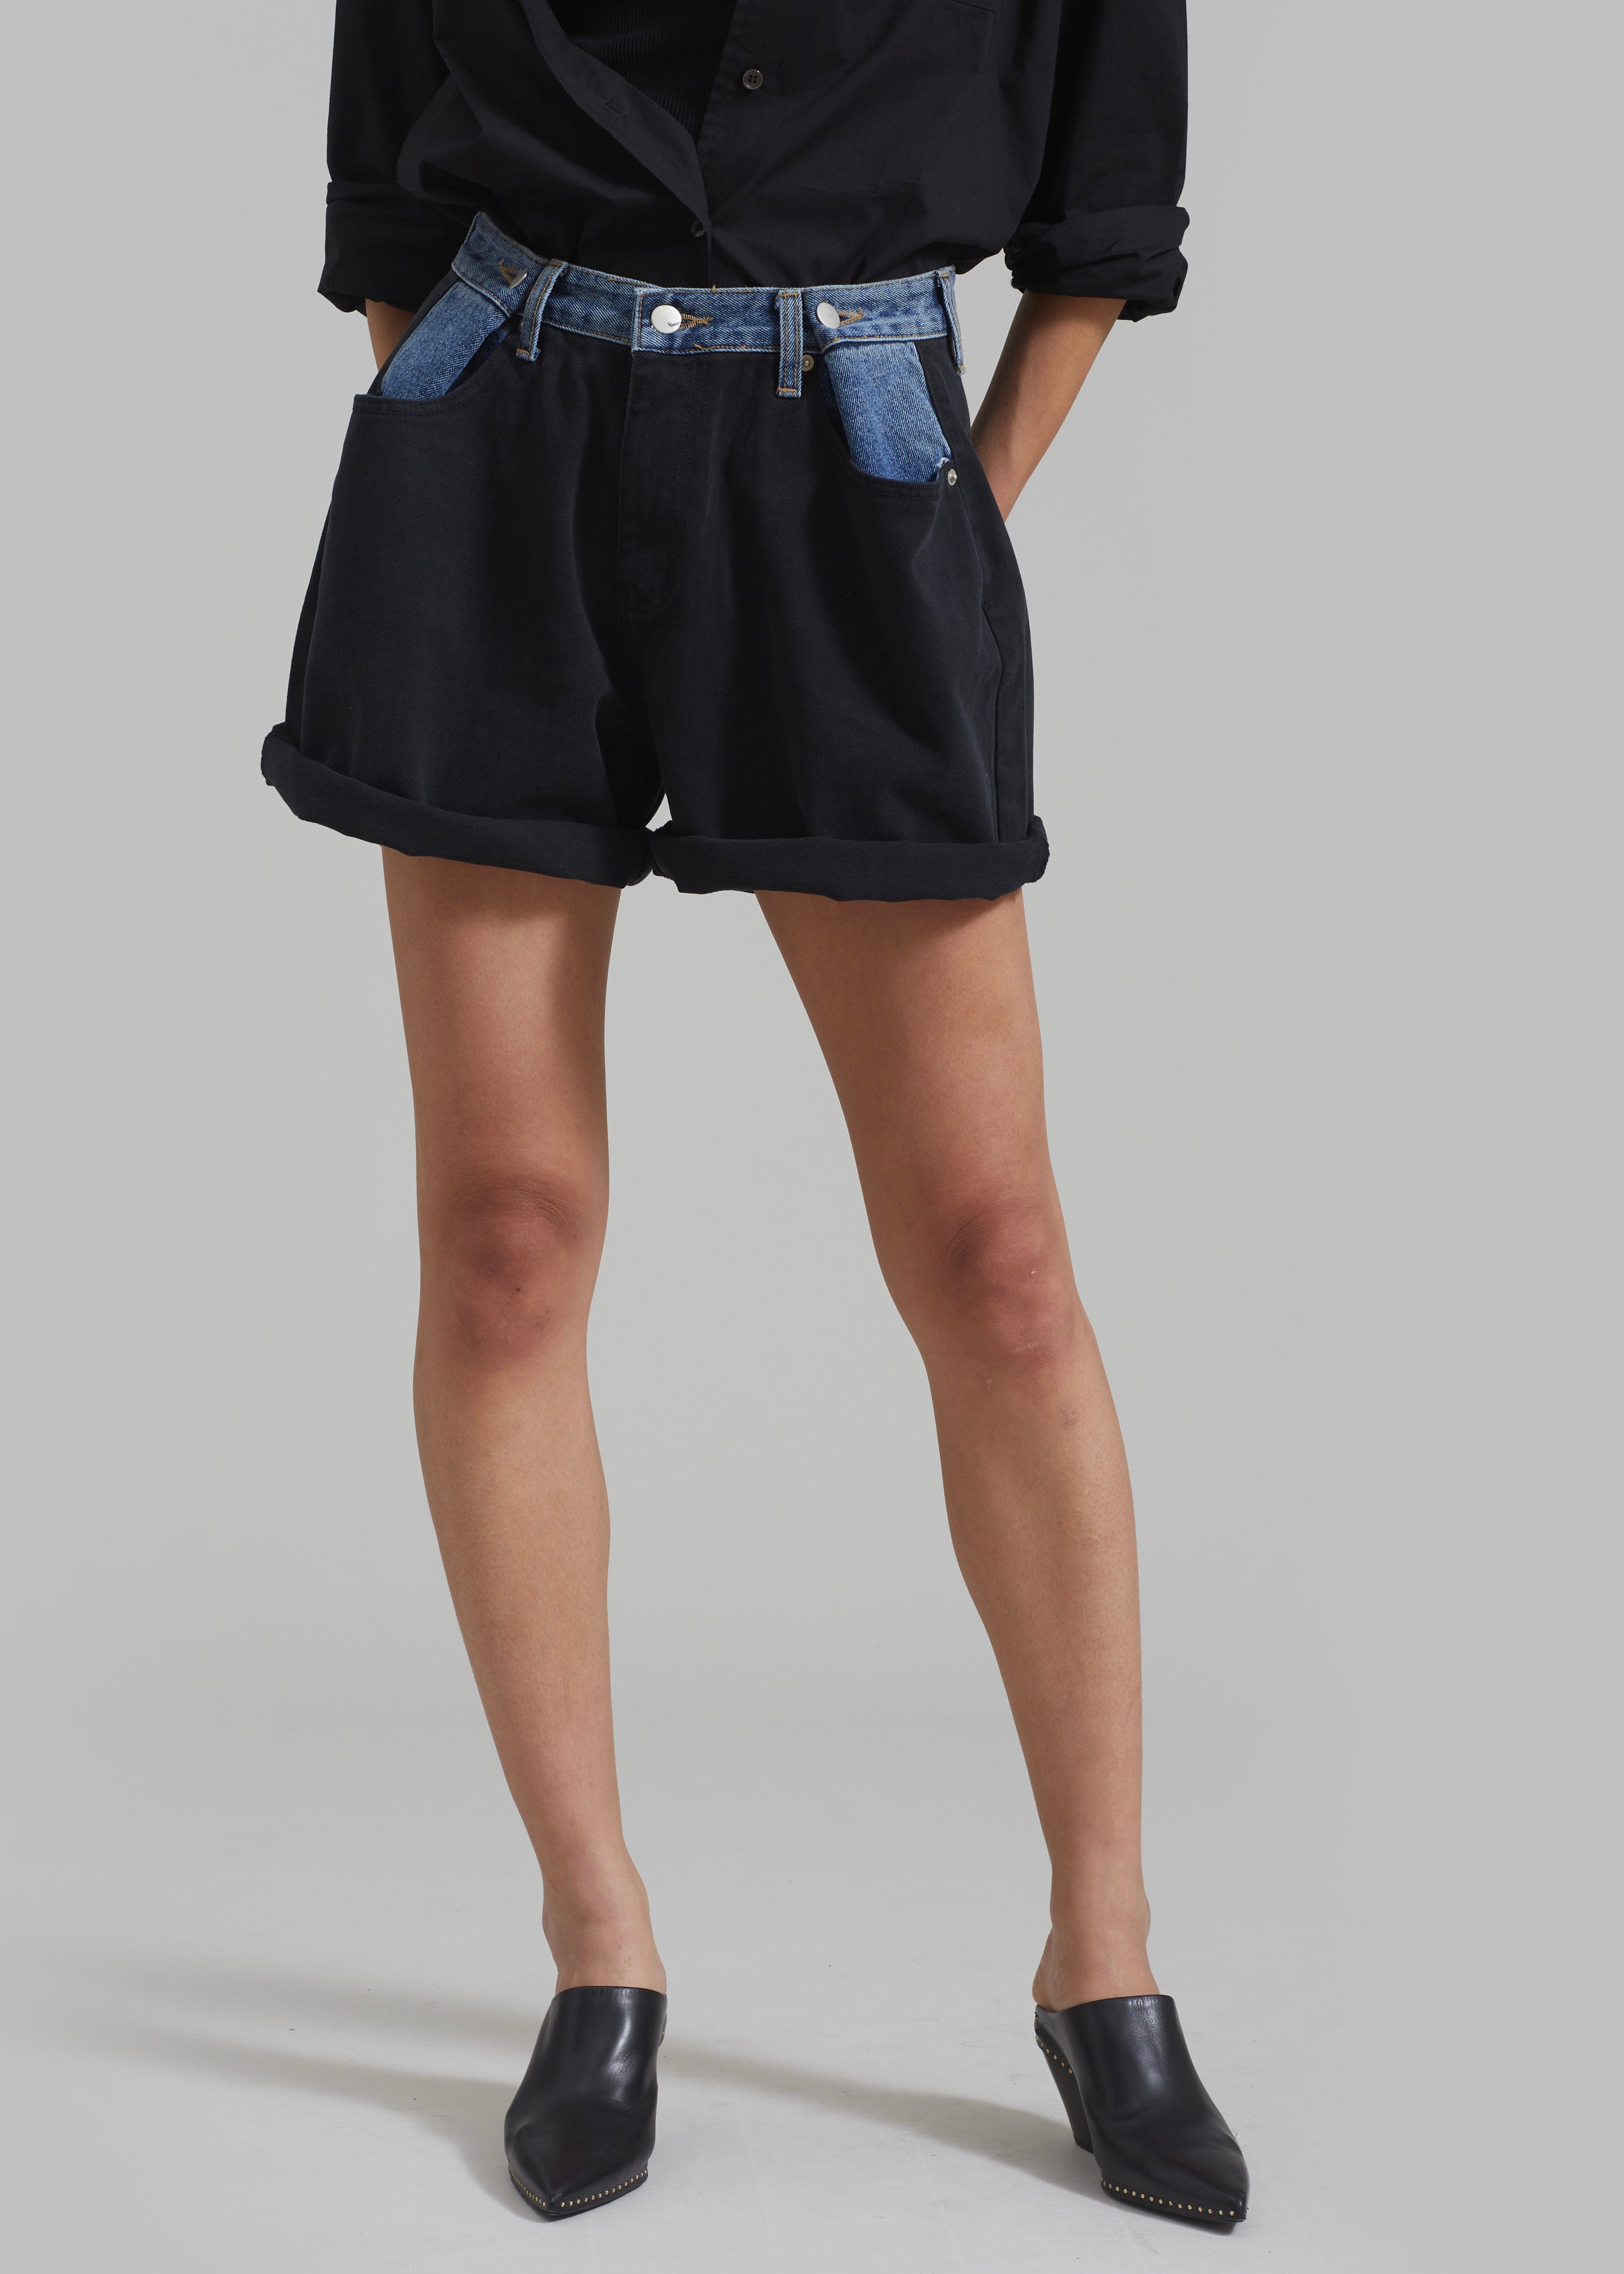 Hayla Contrast Denim Shorts - Black/Blue - 3